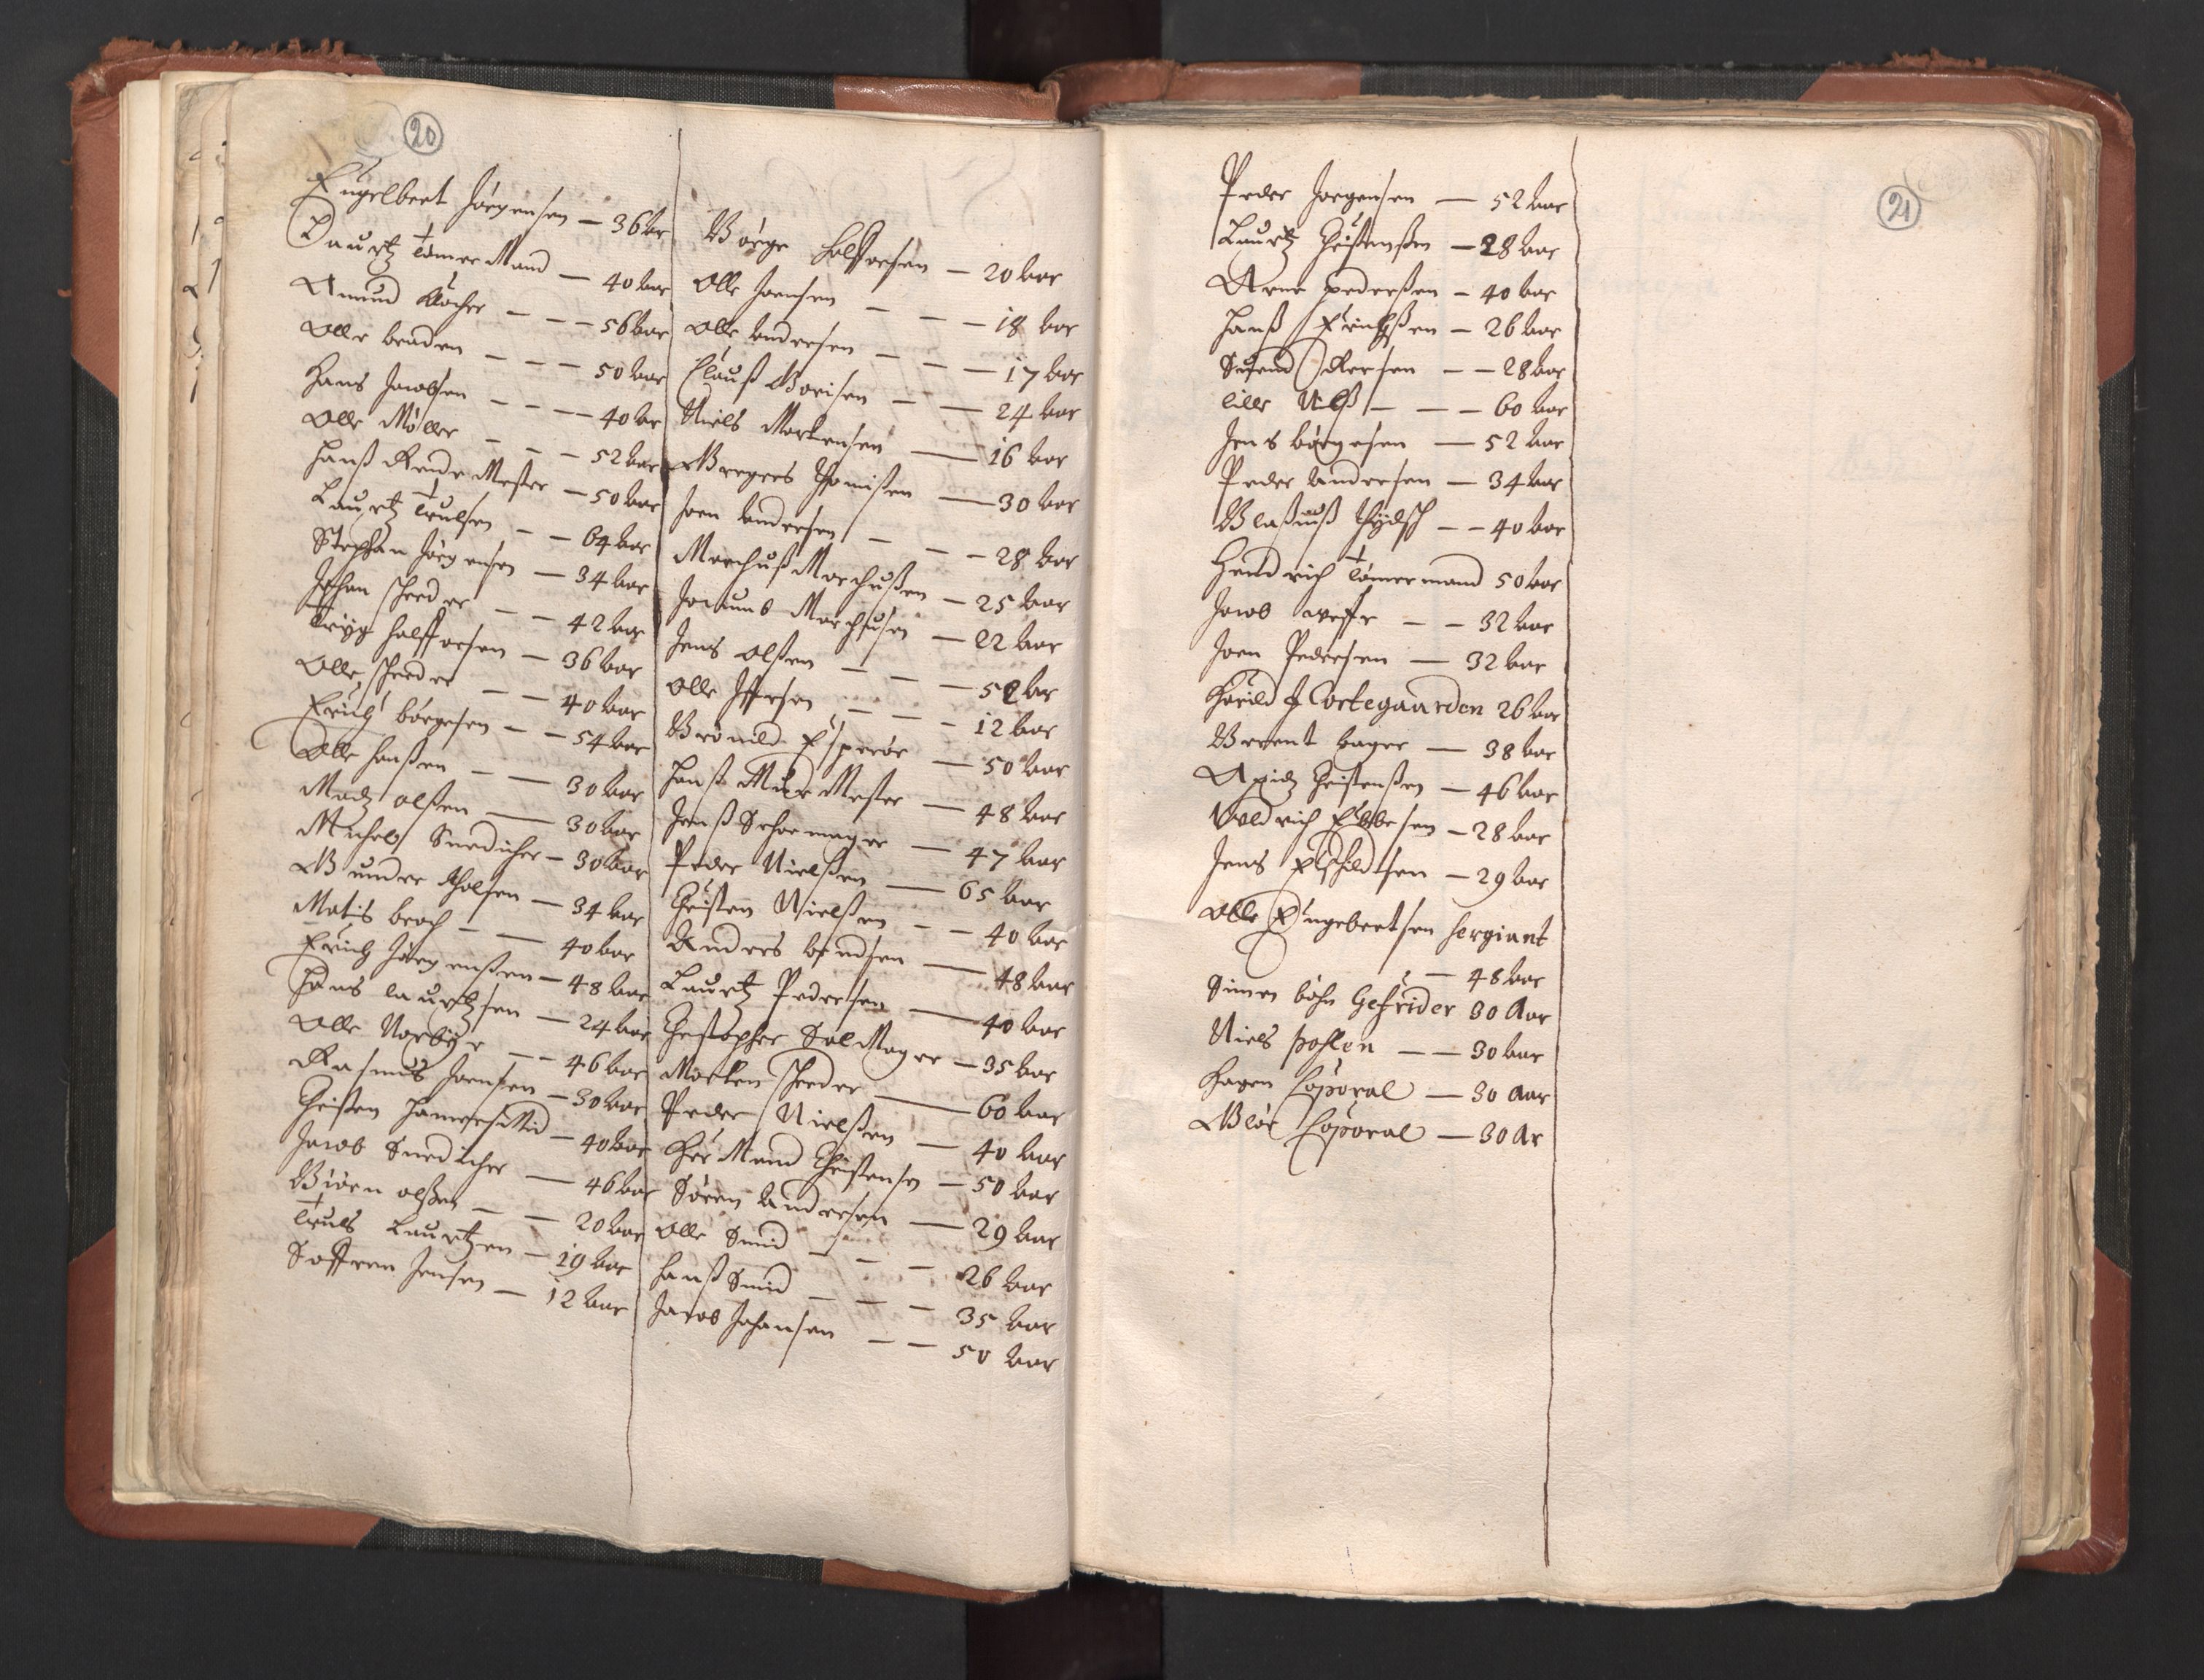 RA, Fogdenes og sorenskrivernes manntall 1664-1666, nr. 1: Fogderier (len og skipreider) i nåværende Østfold fylke, 1664, s. 20-21